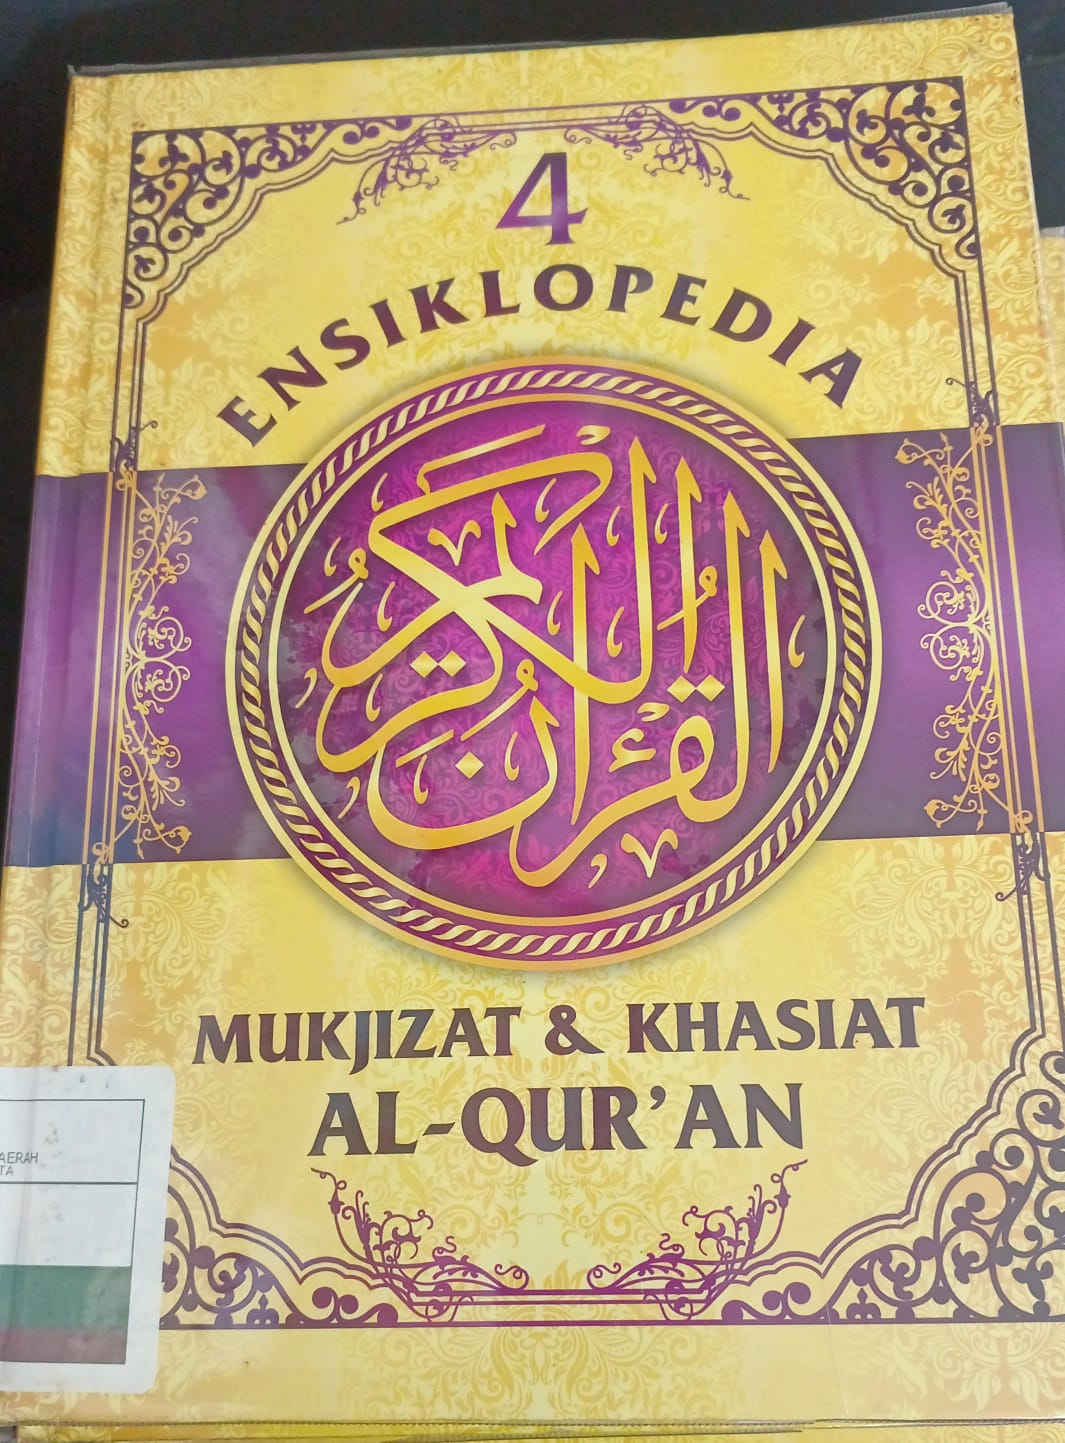 Ensiklopedia mukjizat dan khasiat al-qur'an jilid 4